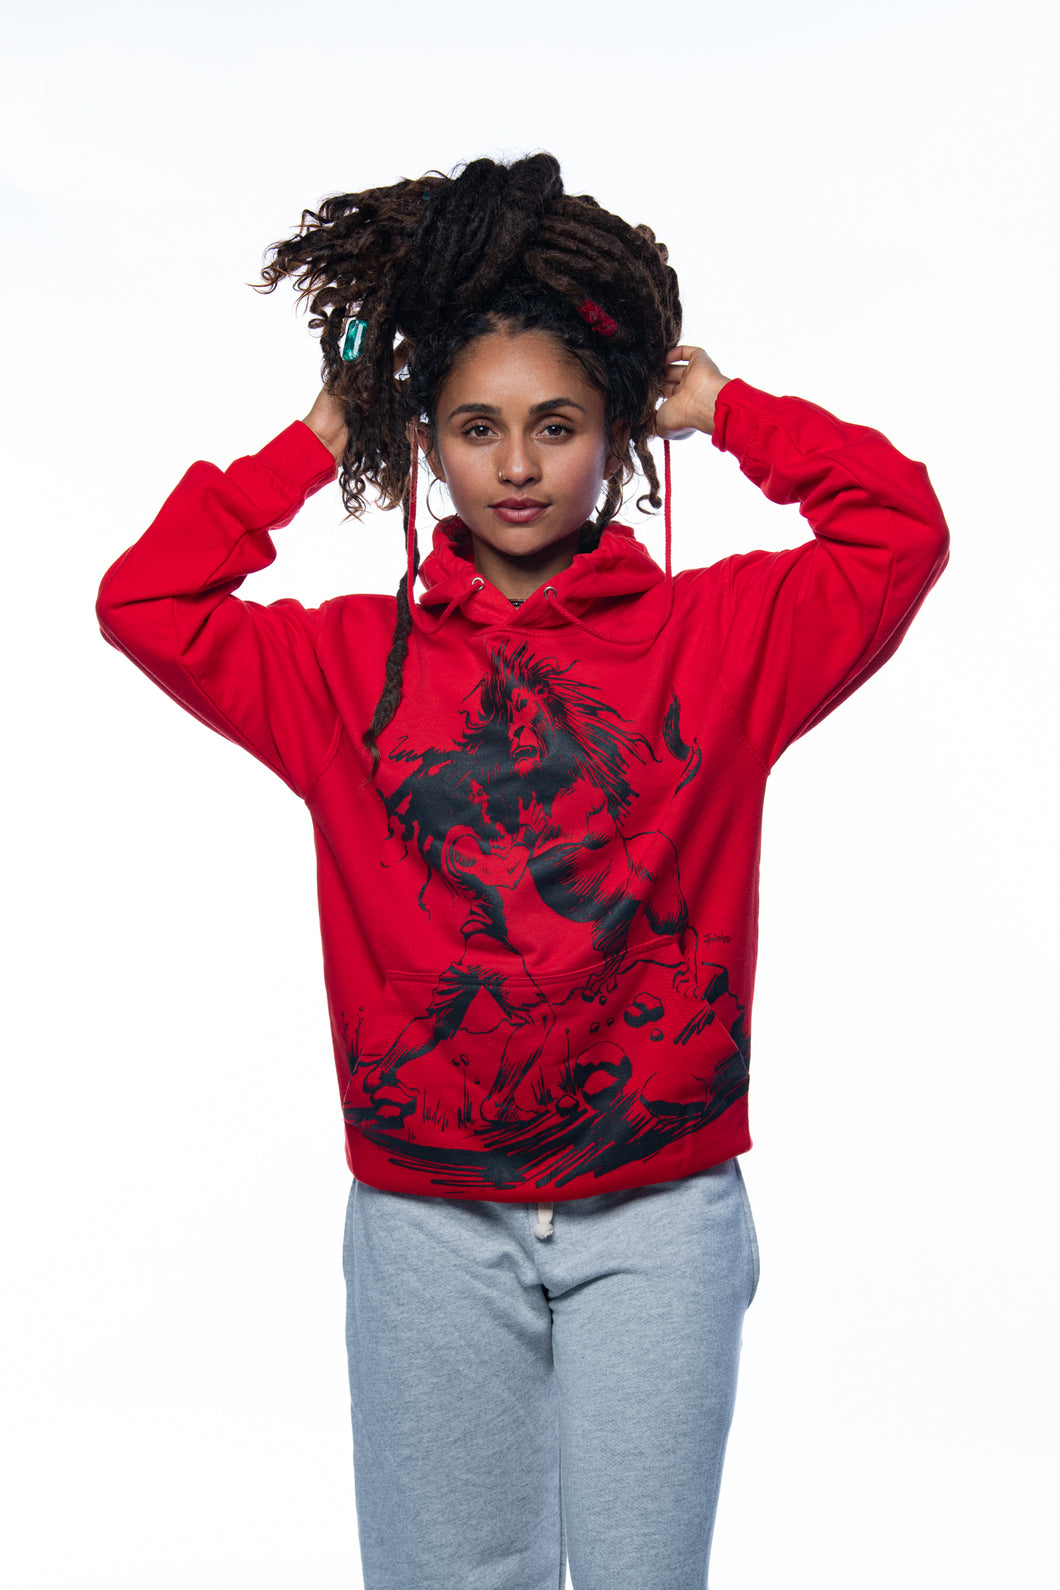 Cooyah rootswear women's rasta hoodie with Dread and Lion graphic in red. Jamaican streetwear clothing.  Rastafari